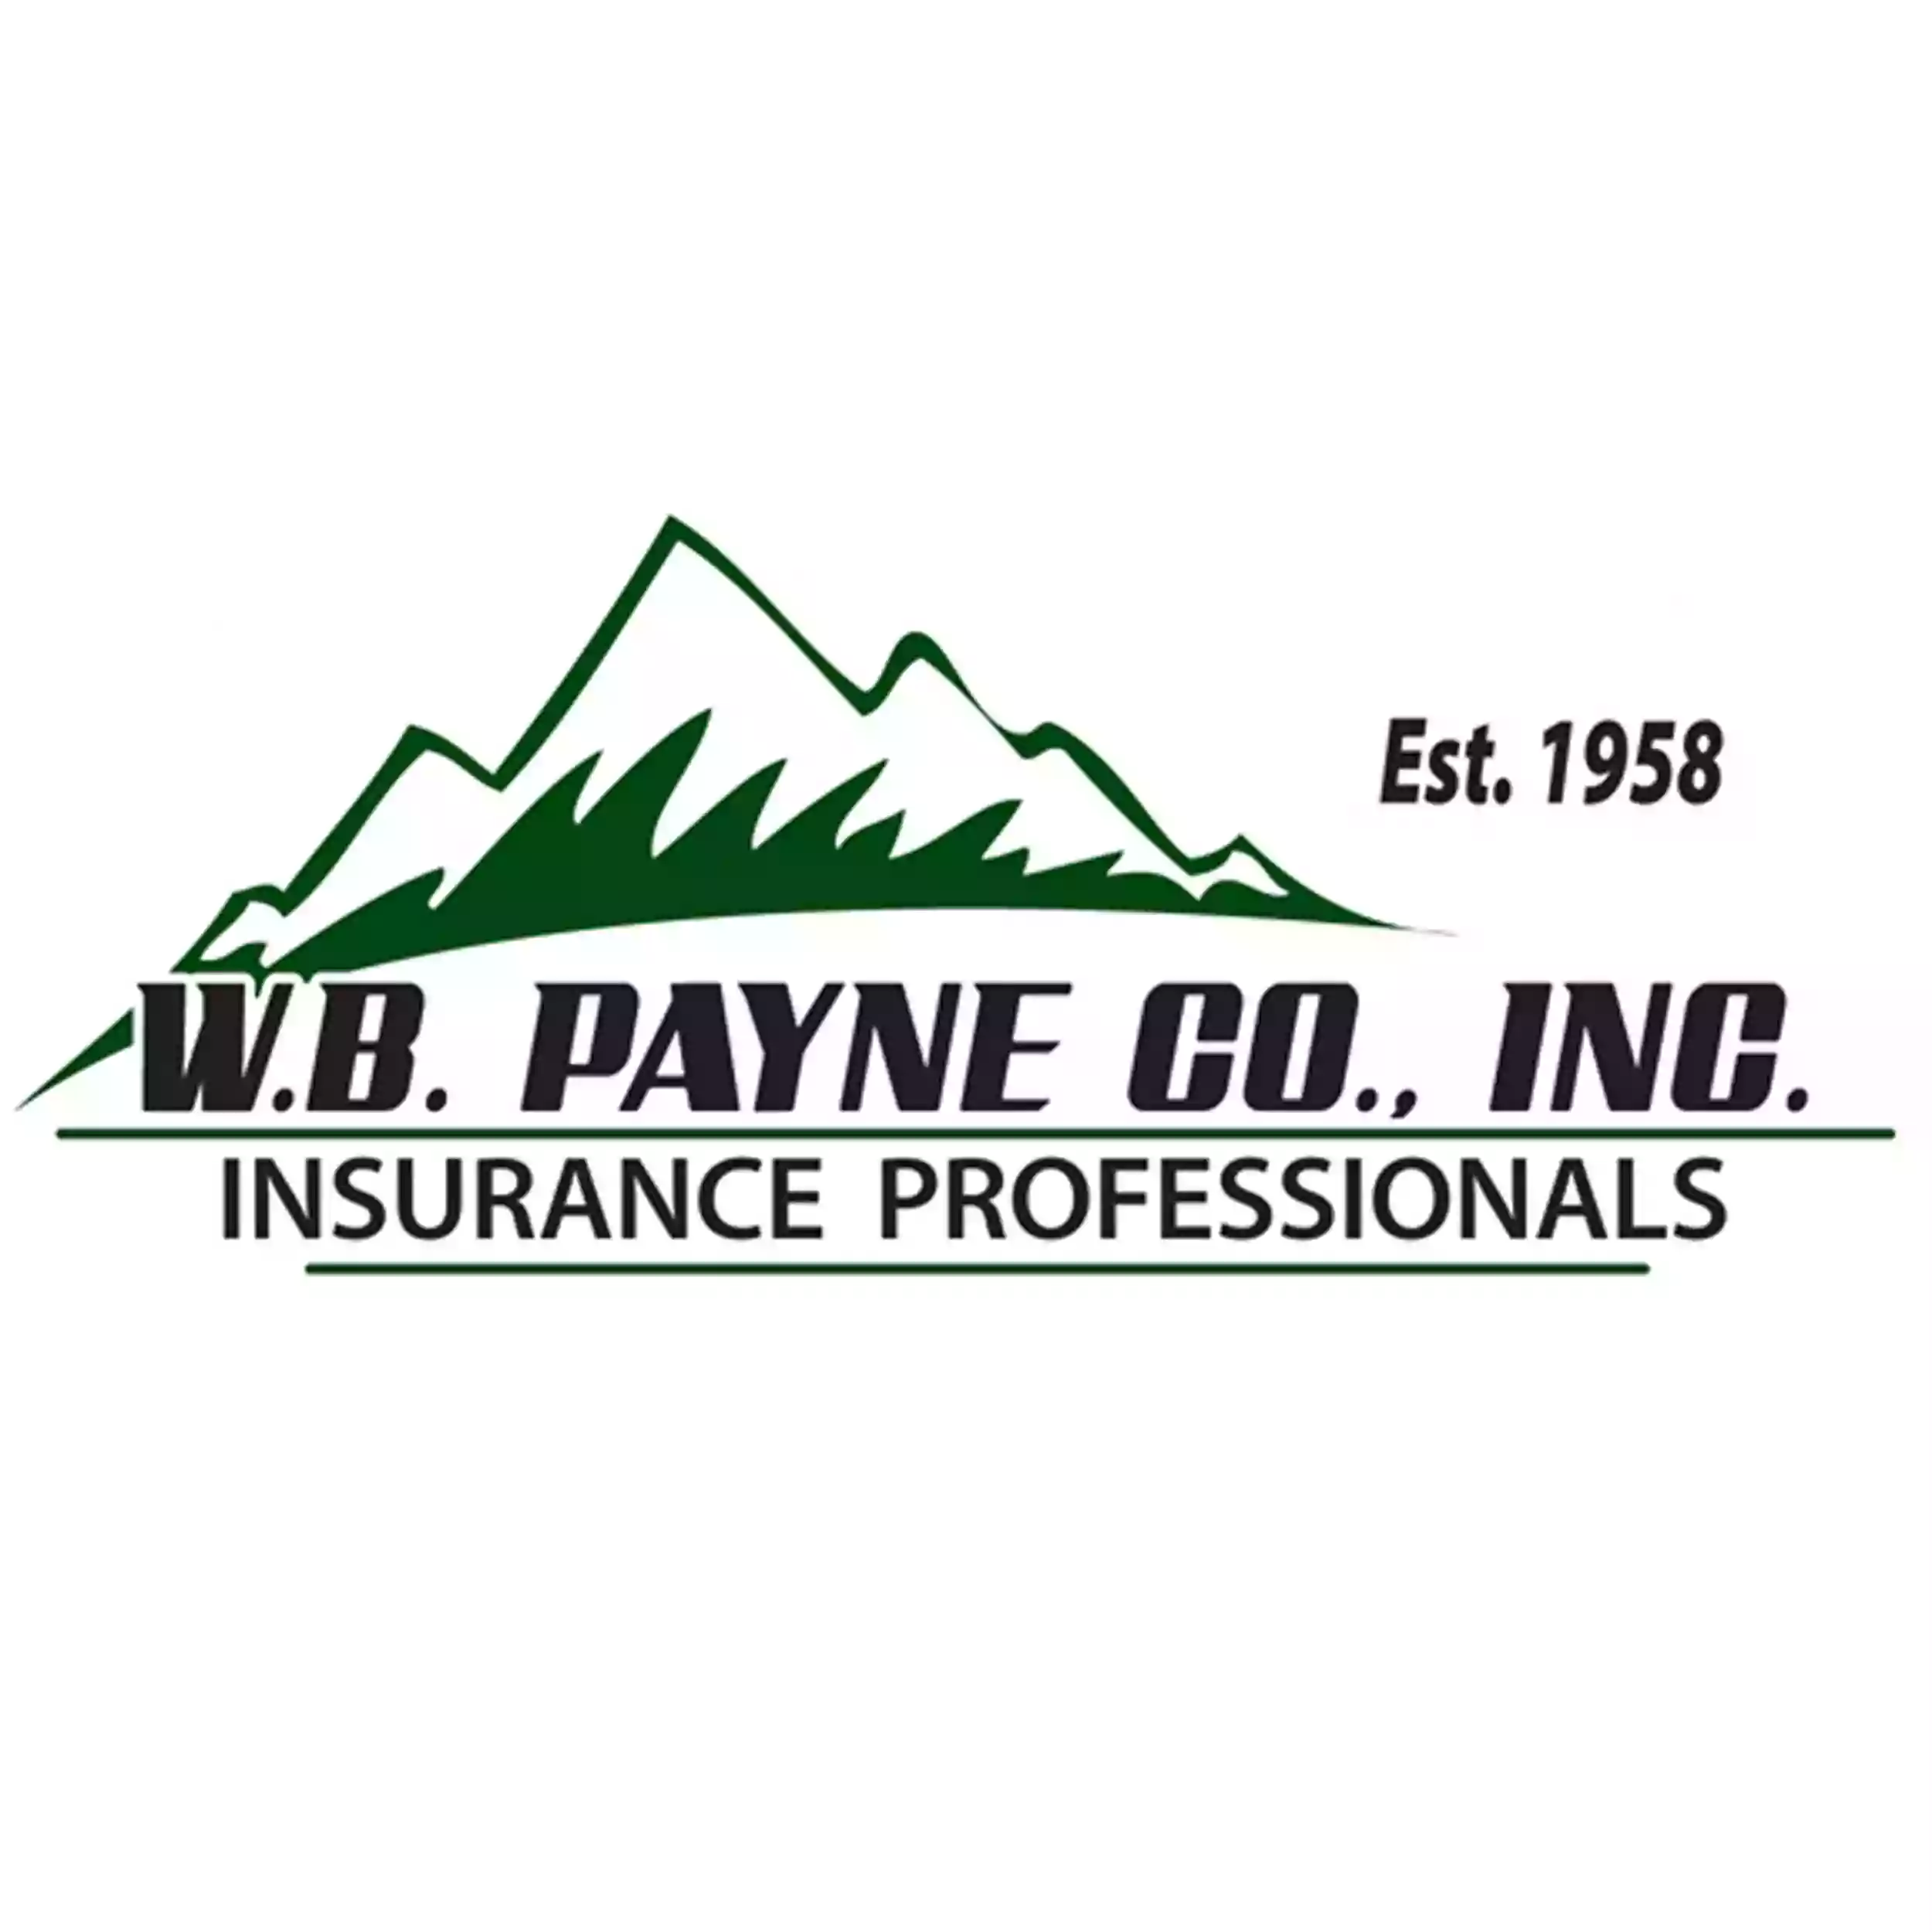 W B Payne Co., Inc, Insurance Professionals